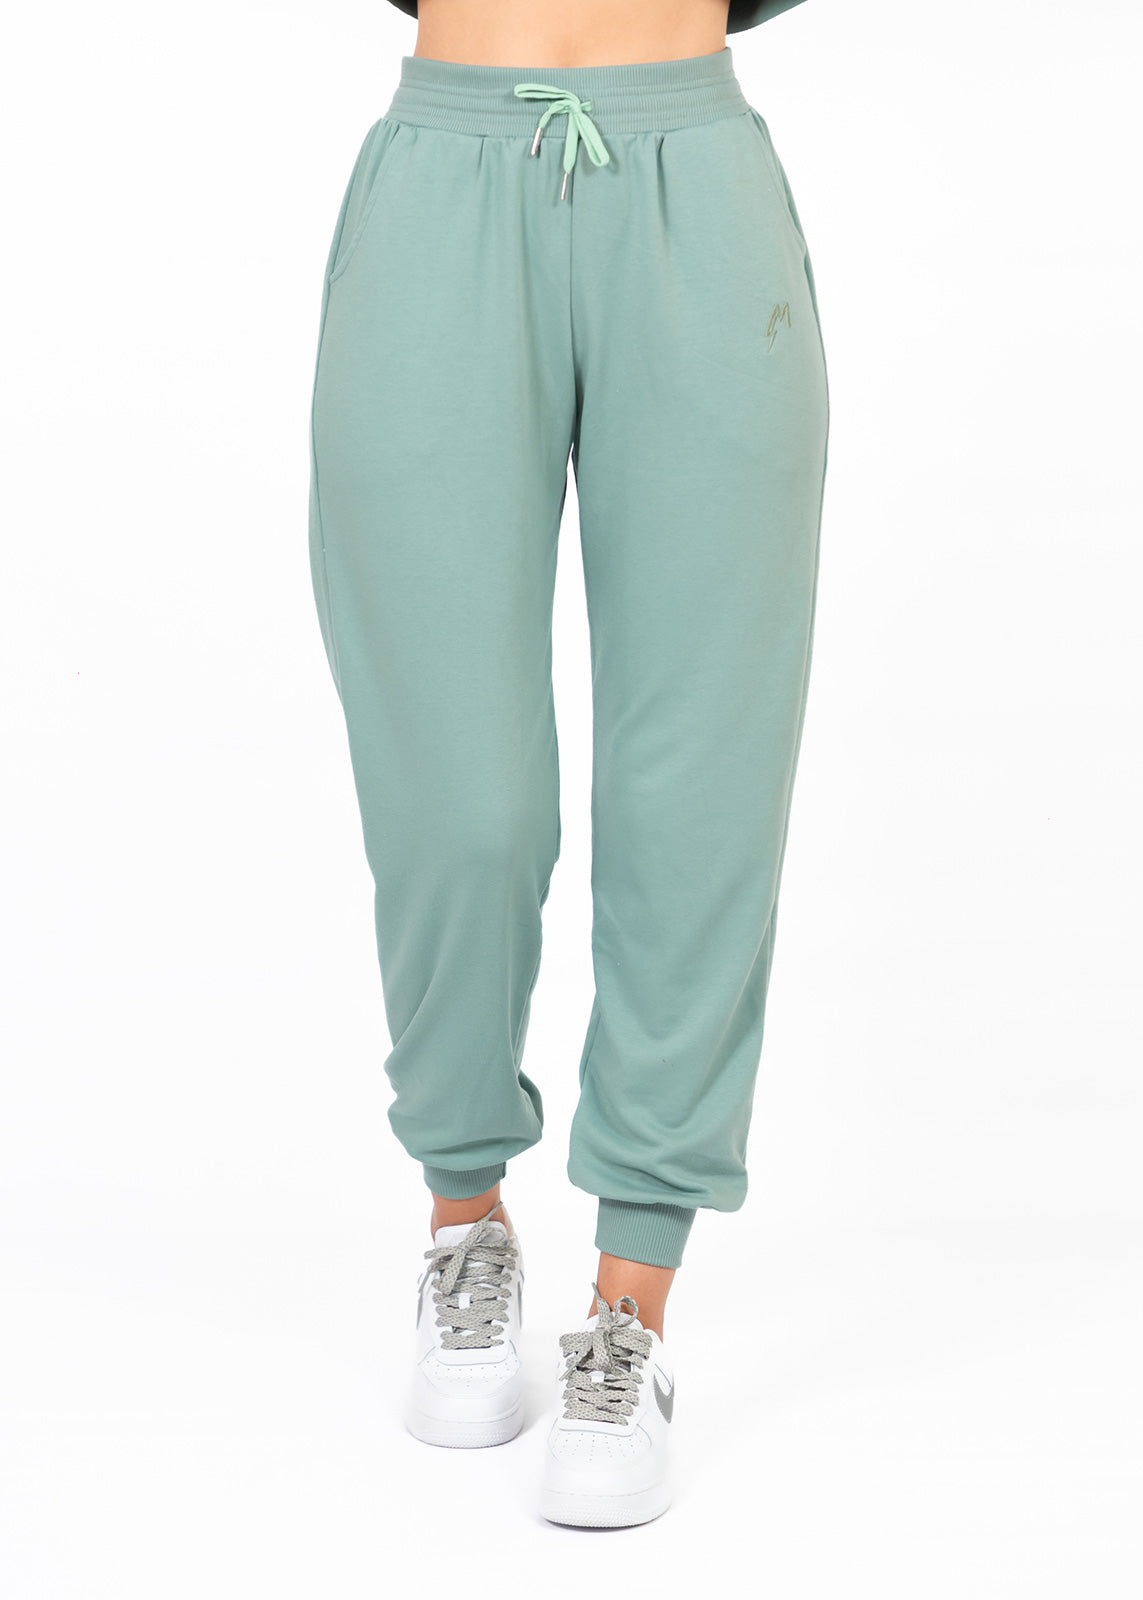 Pantalon para mujer tipo jogger olivia derek Ref. 826723